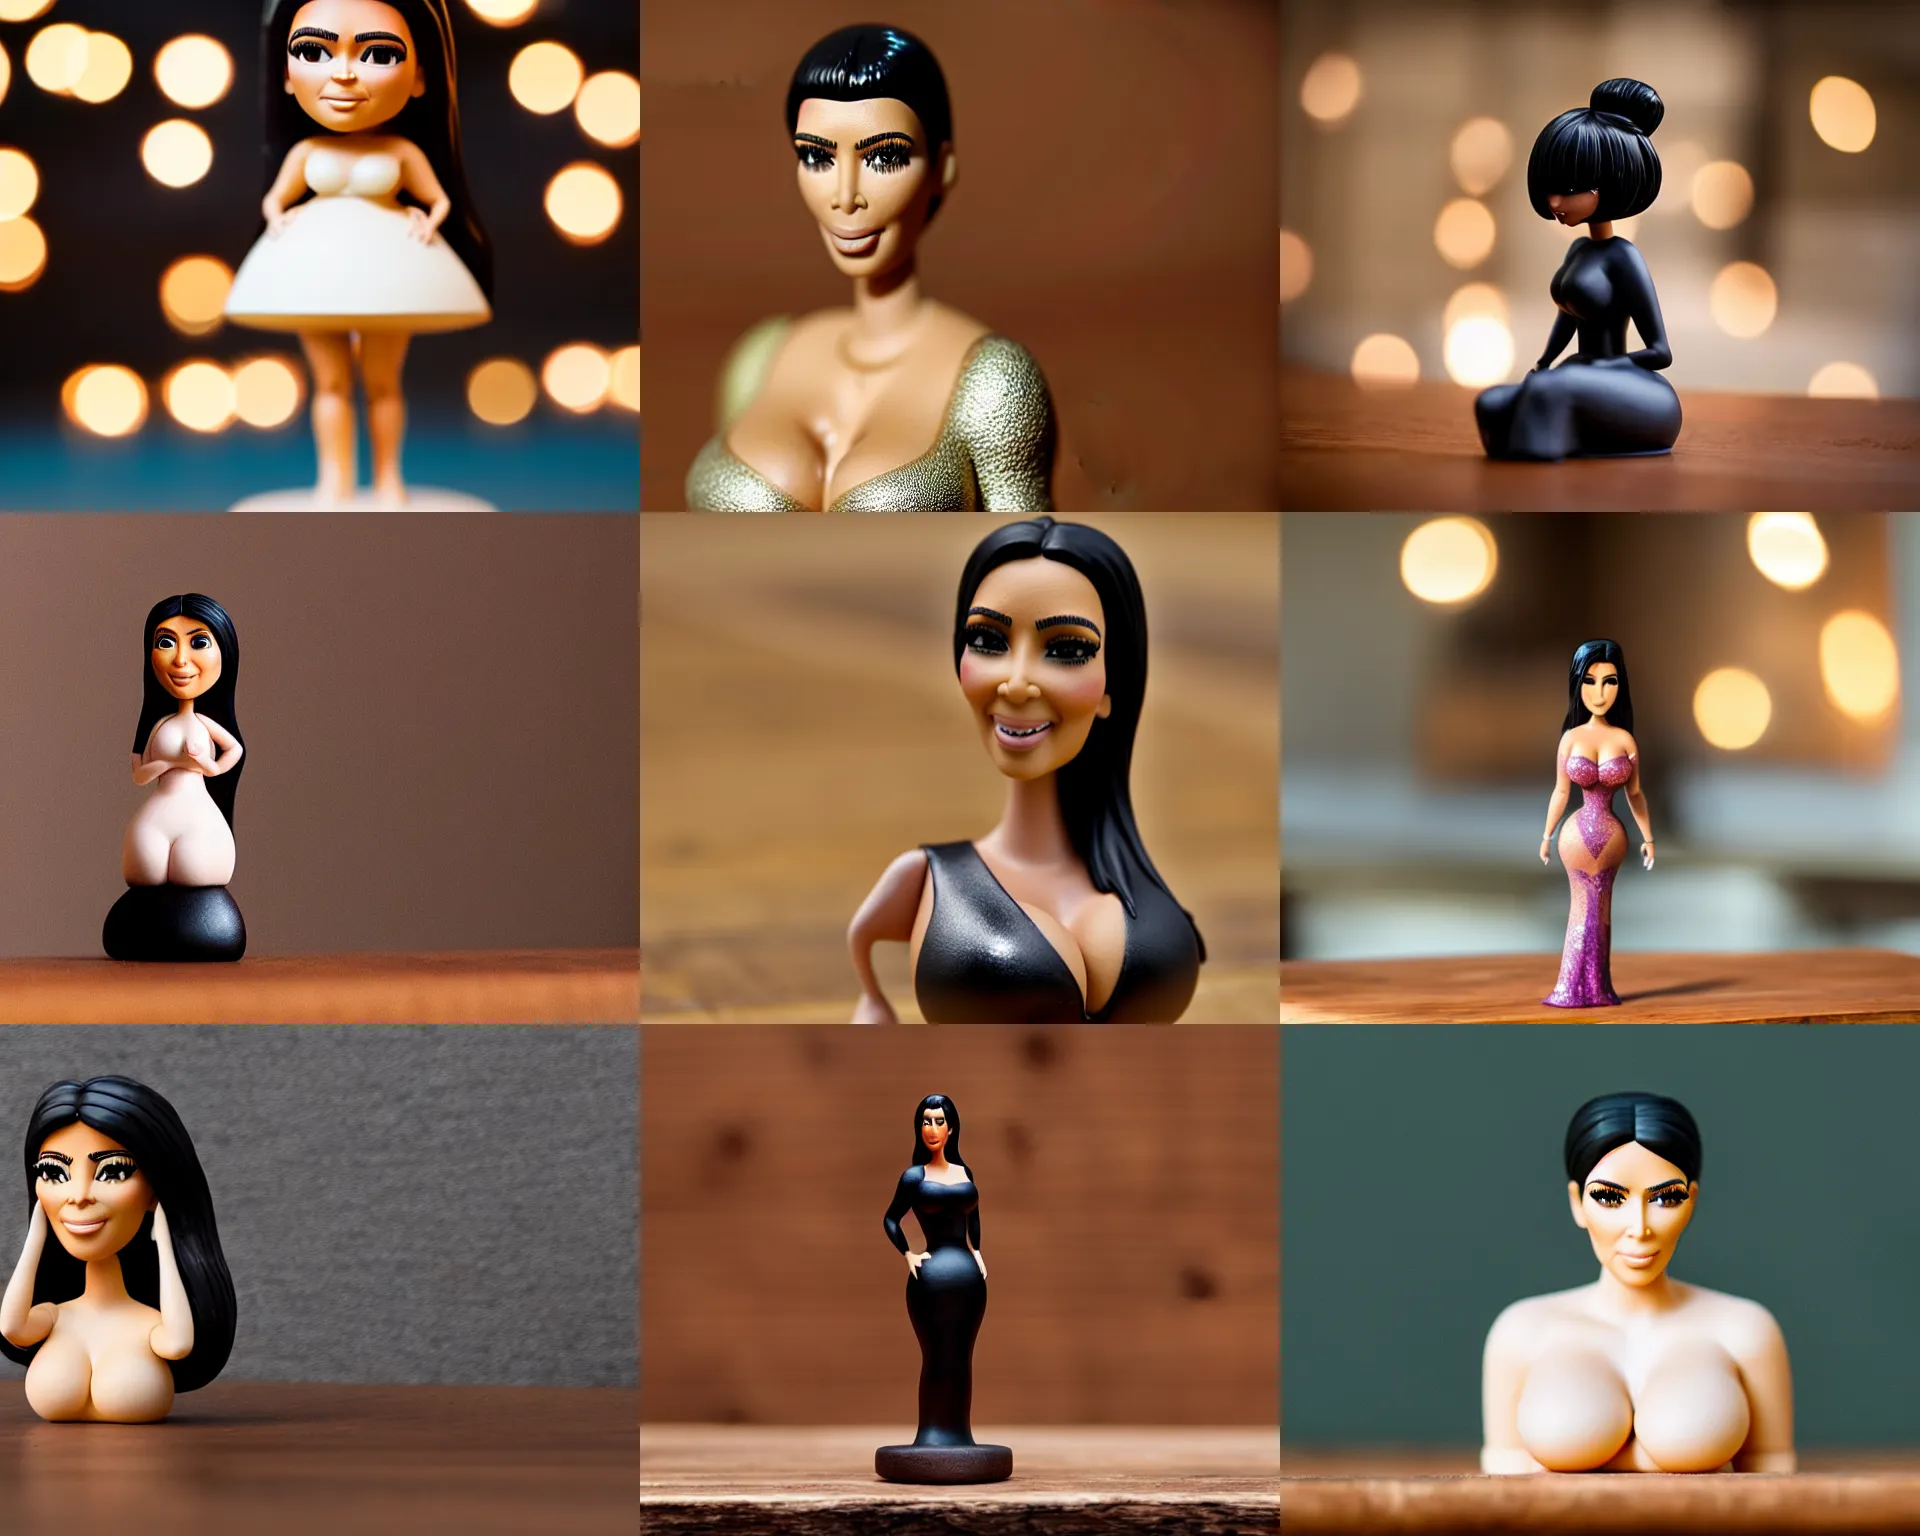 Prompt: kim kardashian figurine by pixar sad bokeh on wooden table.